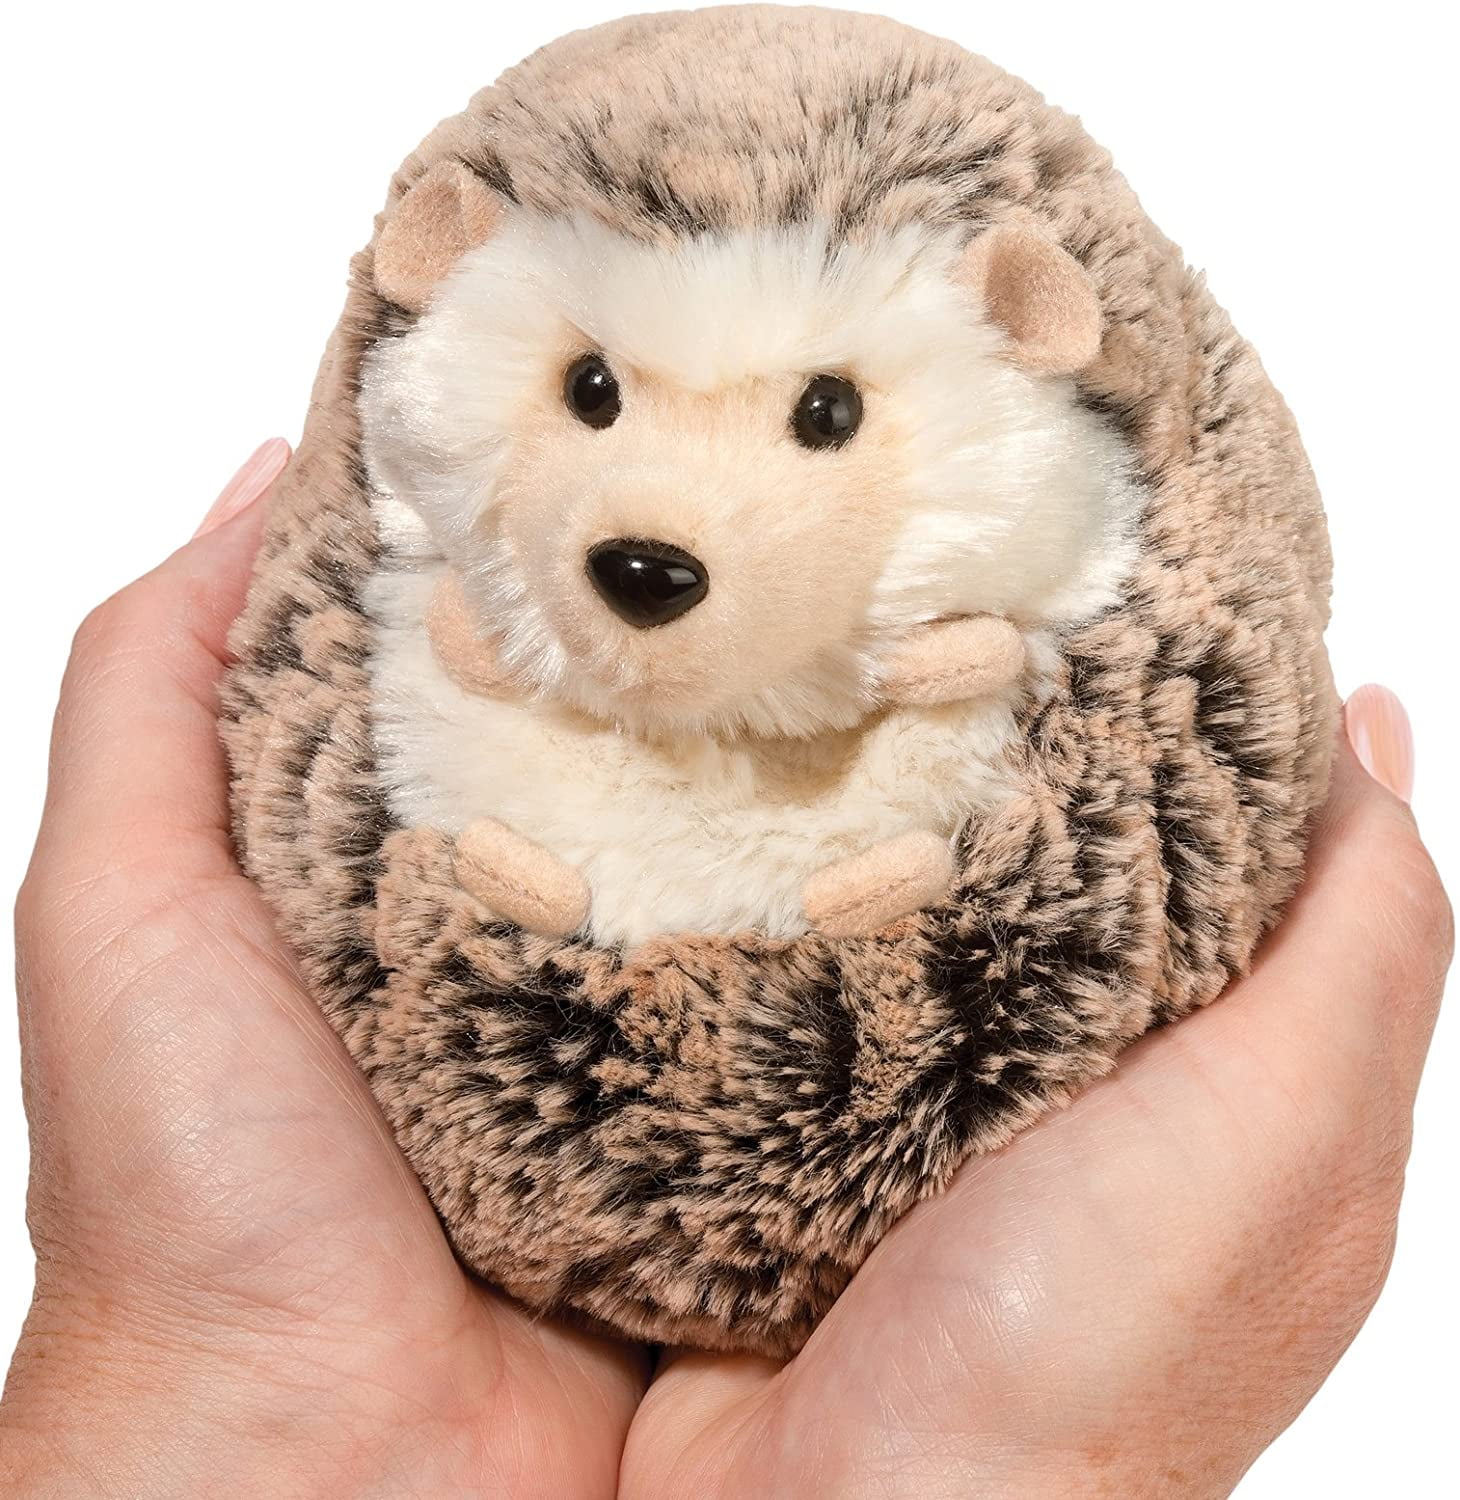 Soft Hedgehog Animal Doll Stuffed Plush Toy Kids Home Wedding Birthday Part `US 